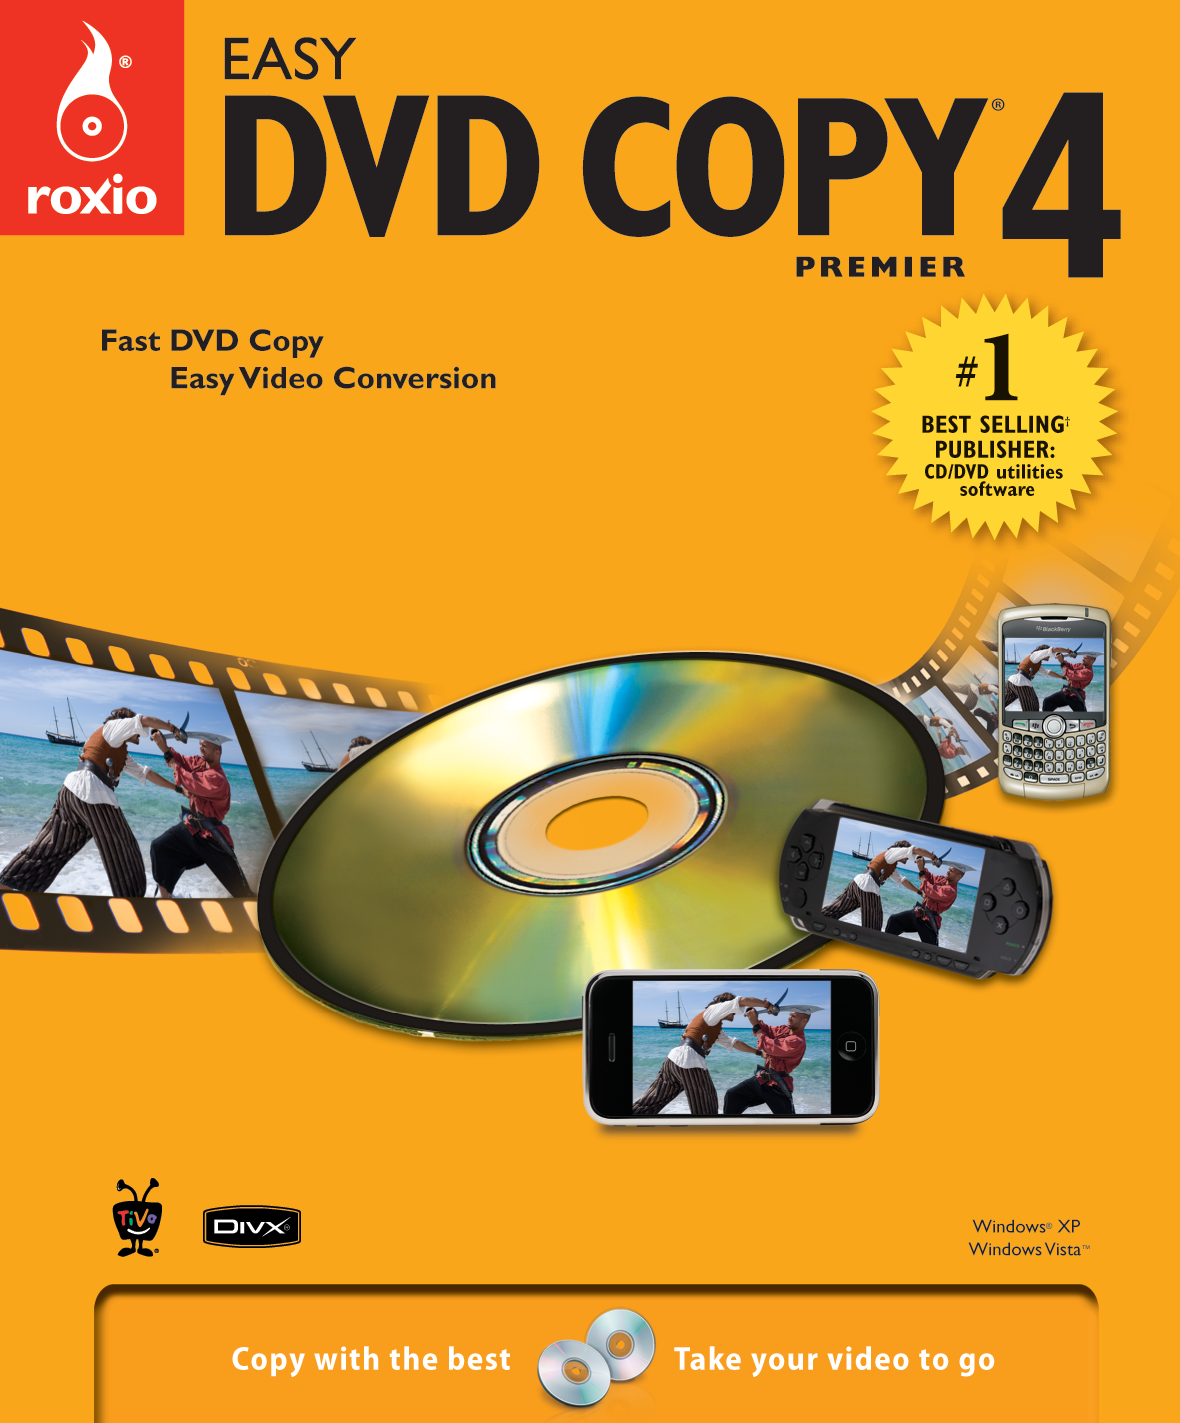 Easy cd. Roxio CD DVD. Roxio easy CD creator. Roxio easy CD & DVD Burning. Roxio creator easy DVD.